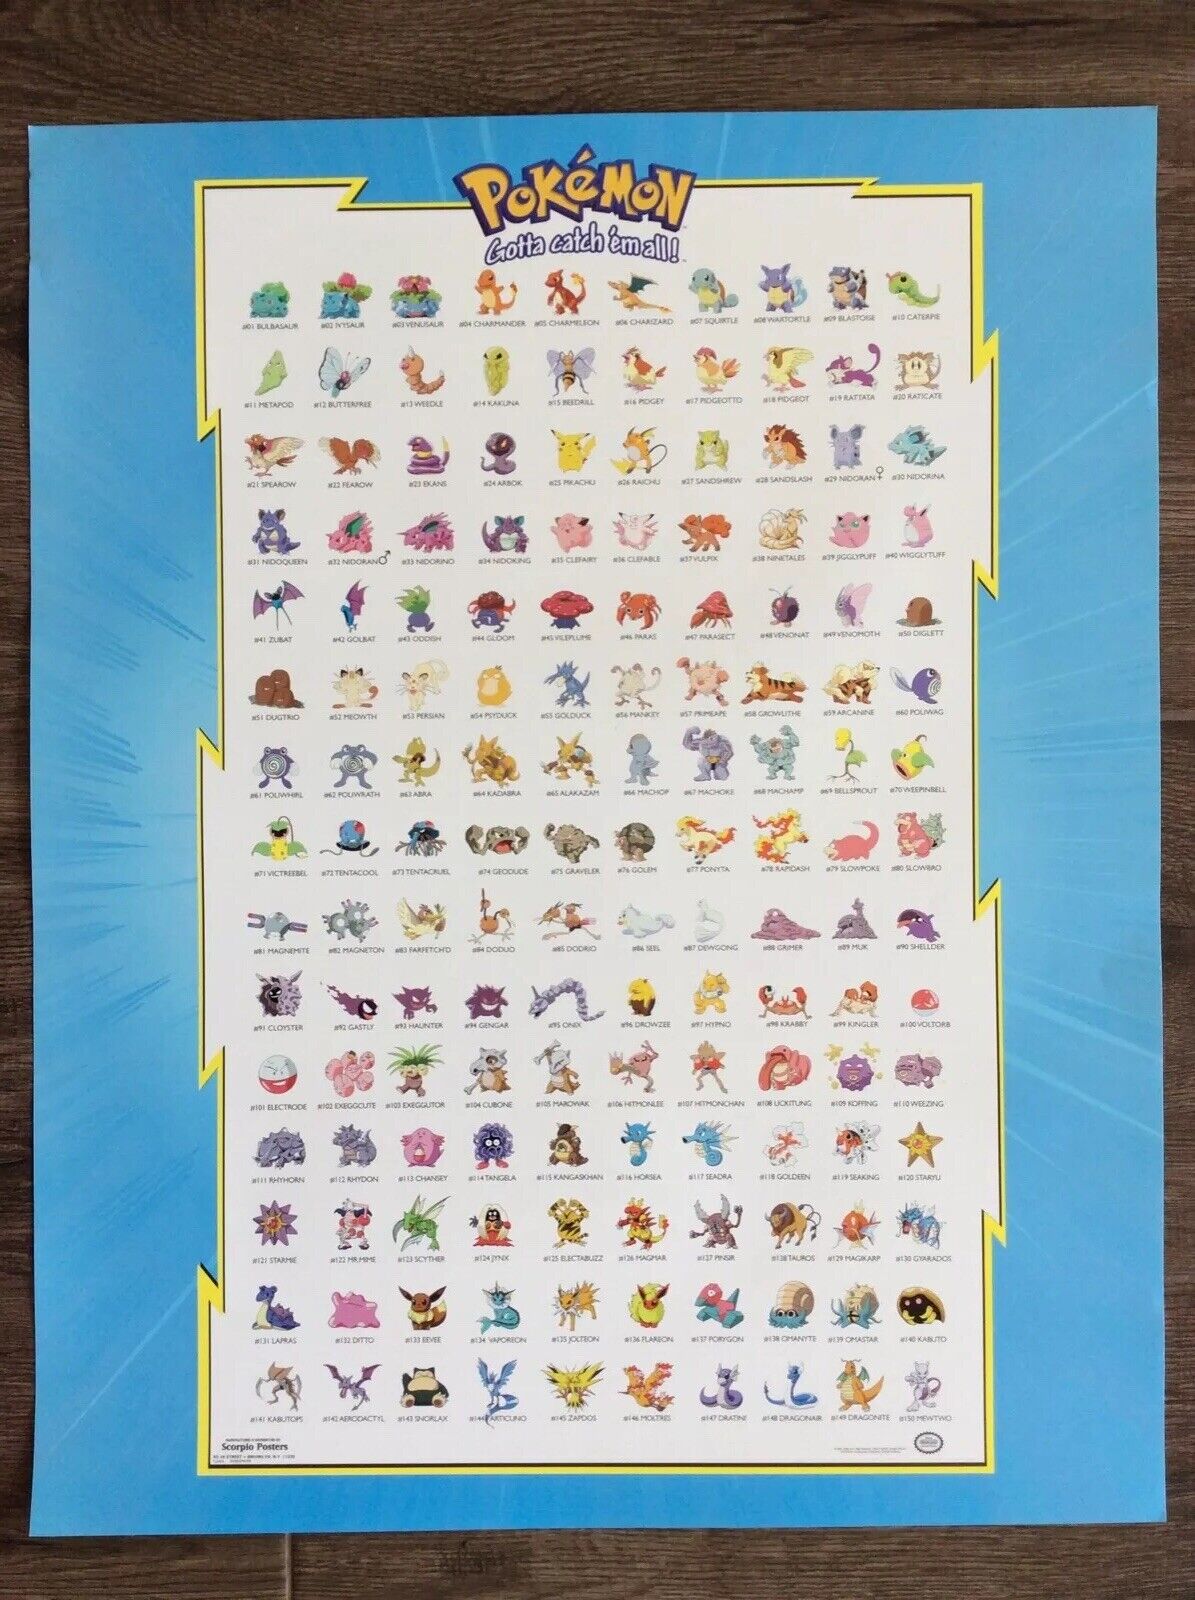 Pokemon Gotta catch 'em all Original 150 Pokemon Poster 1998 Nintendo Anime 